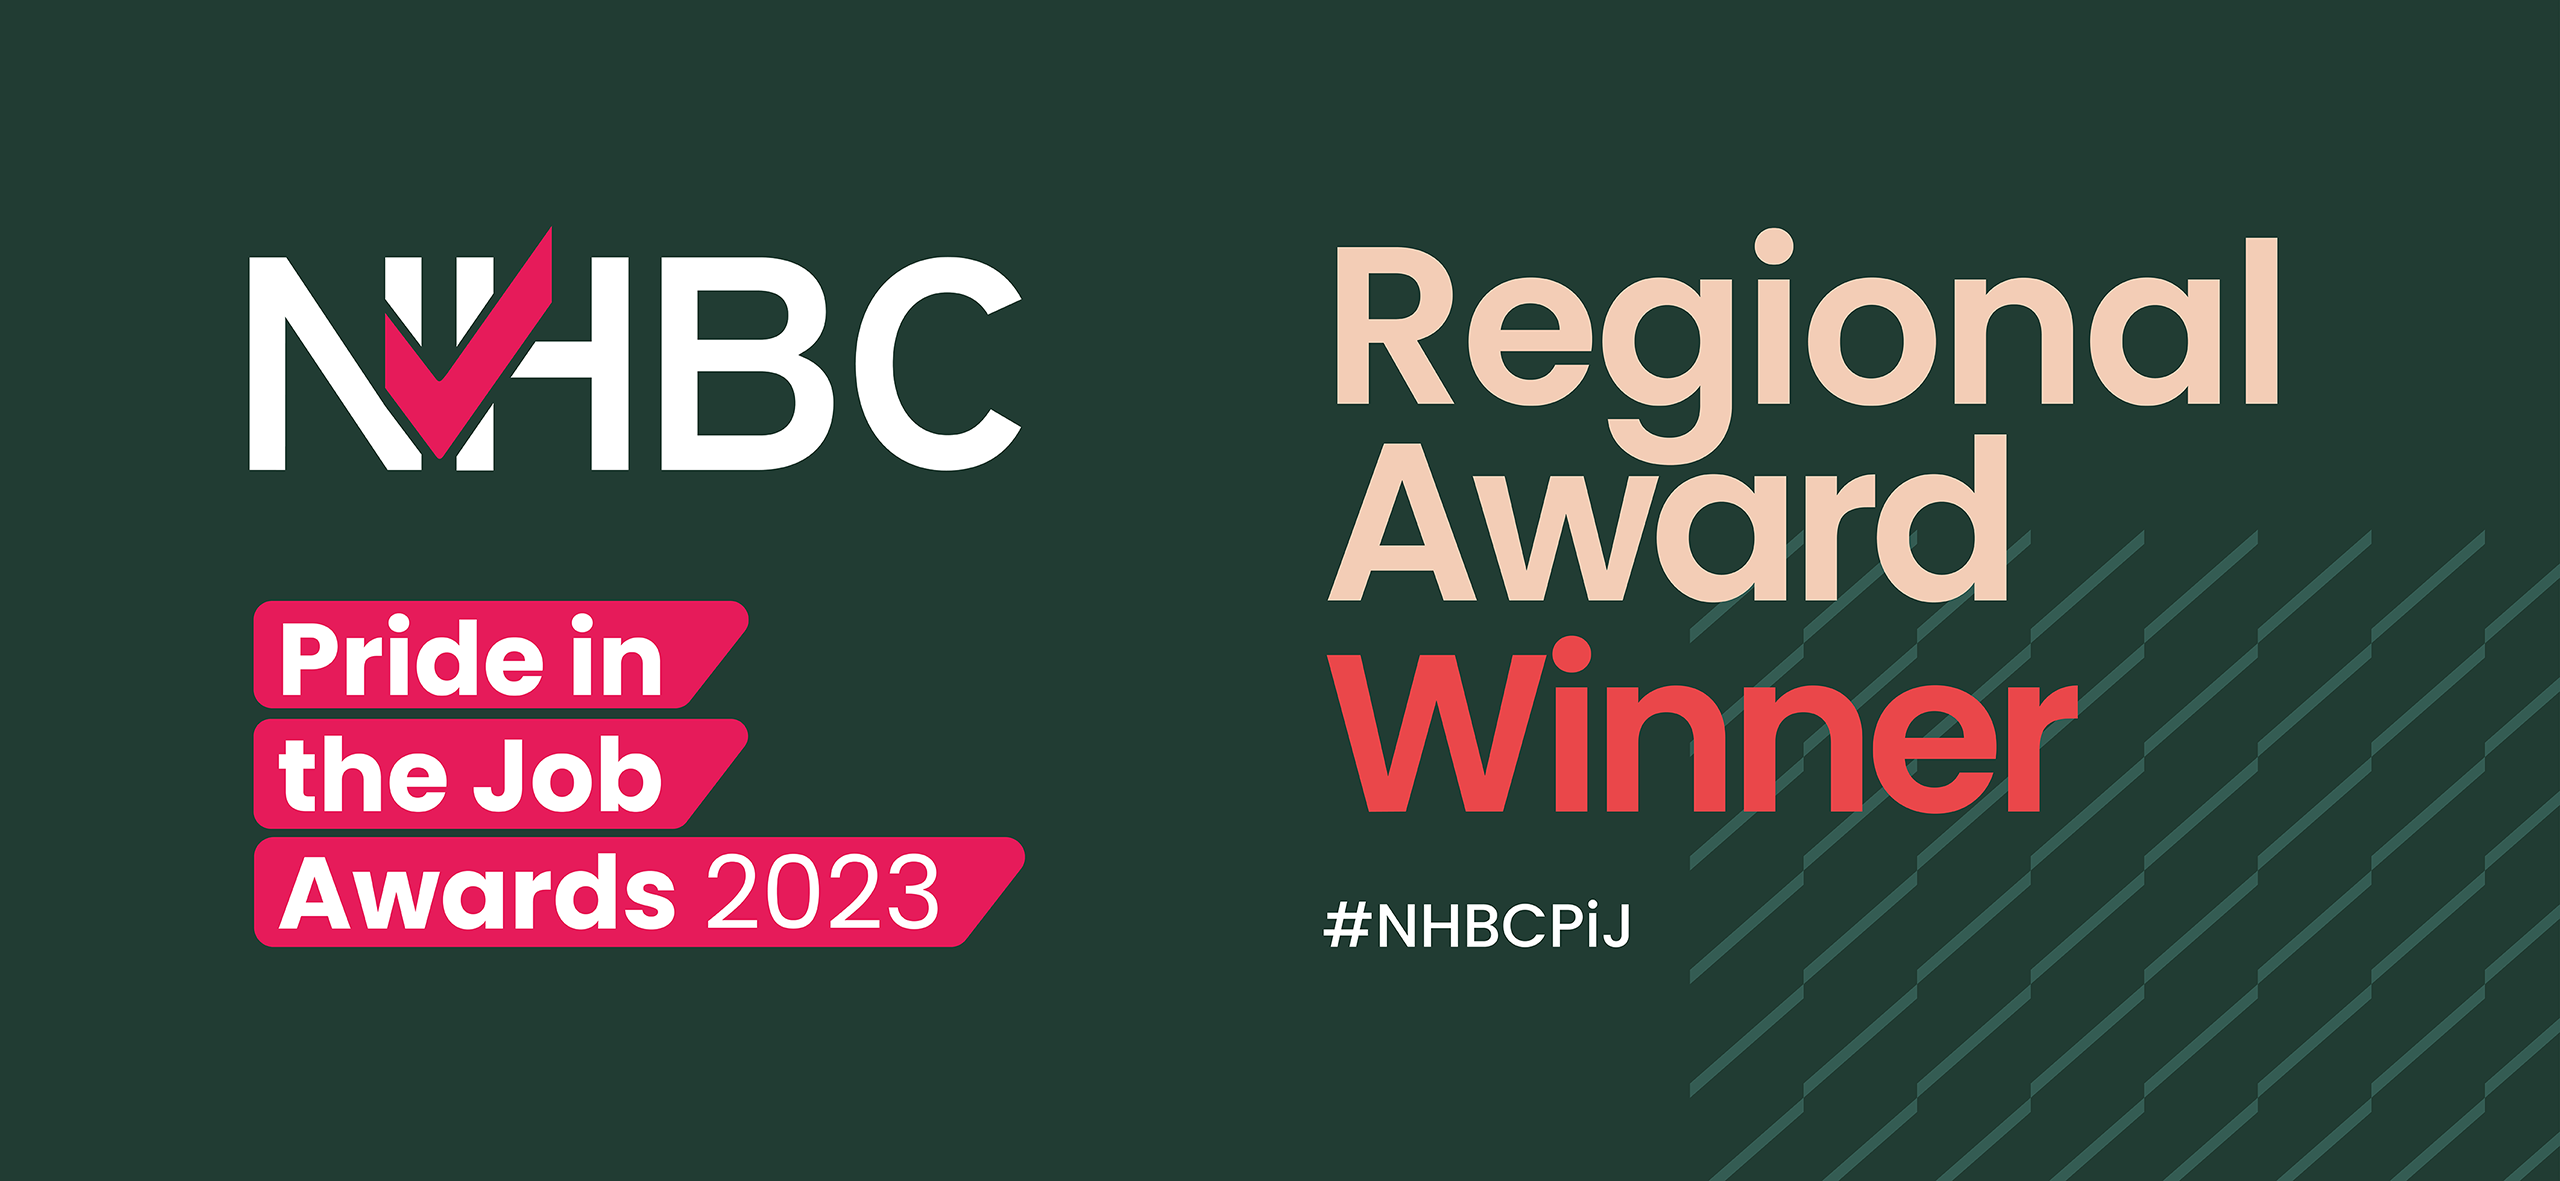 NHBC Regional Award Winner 2023